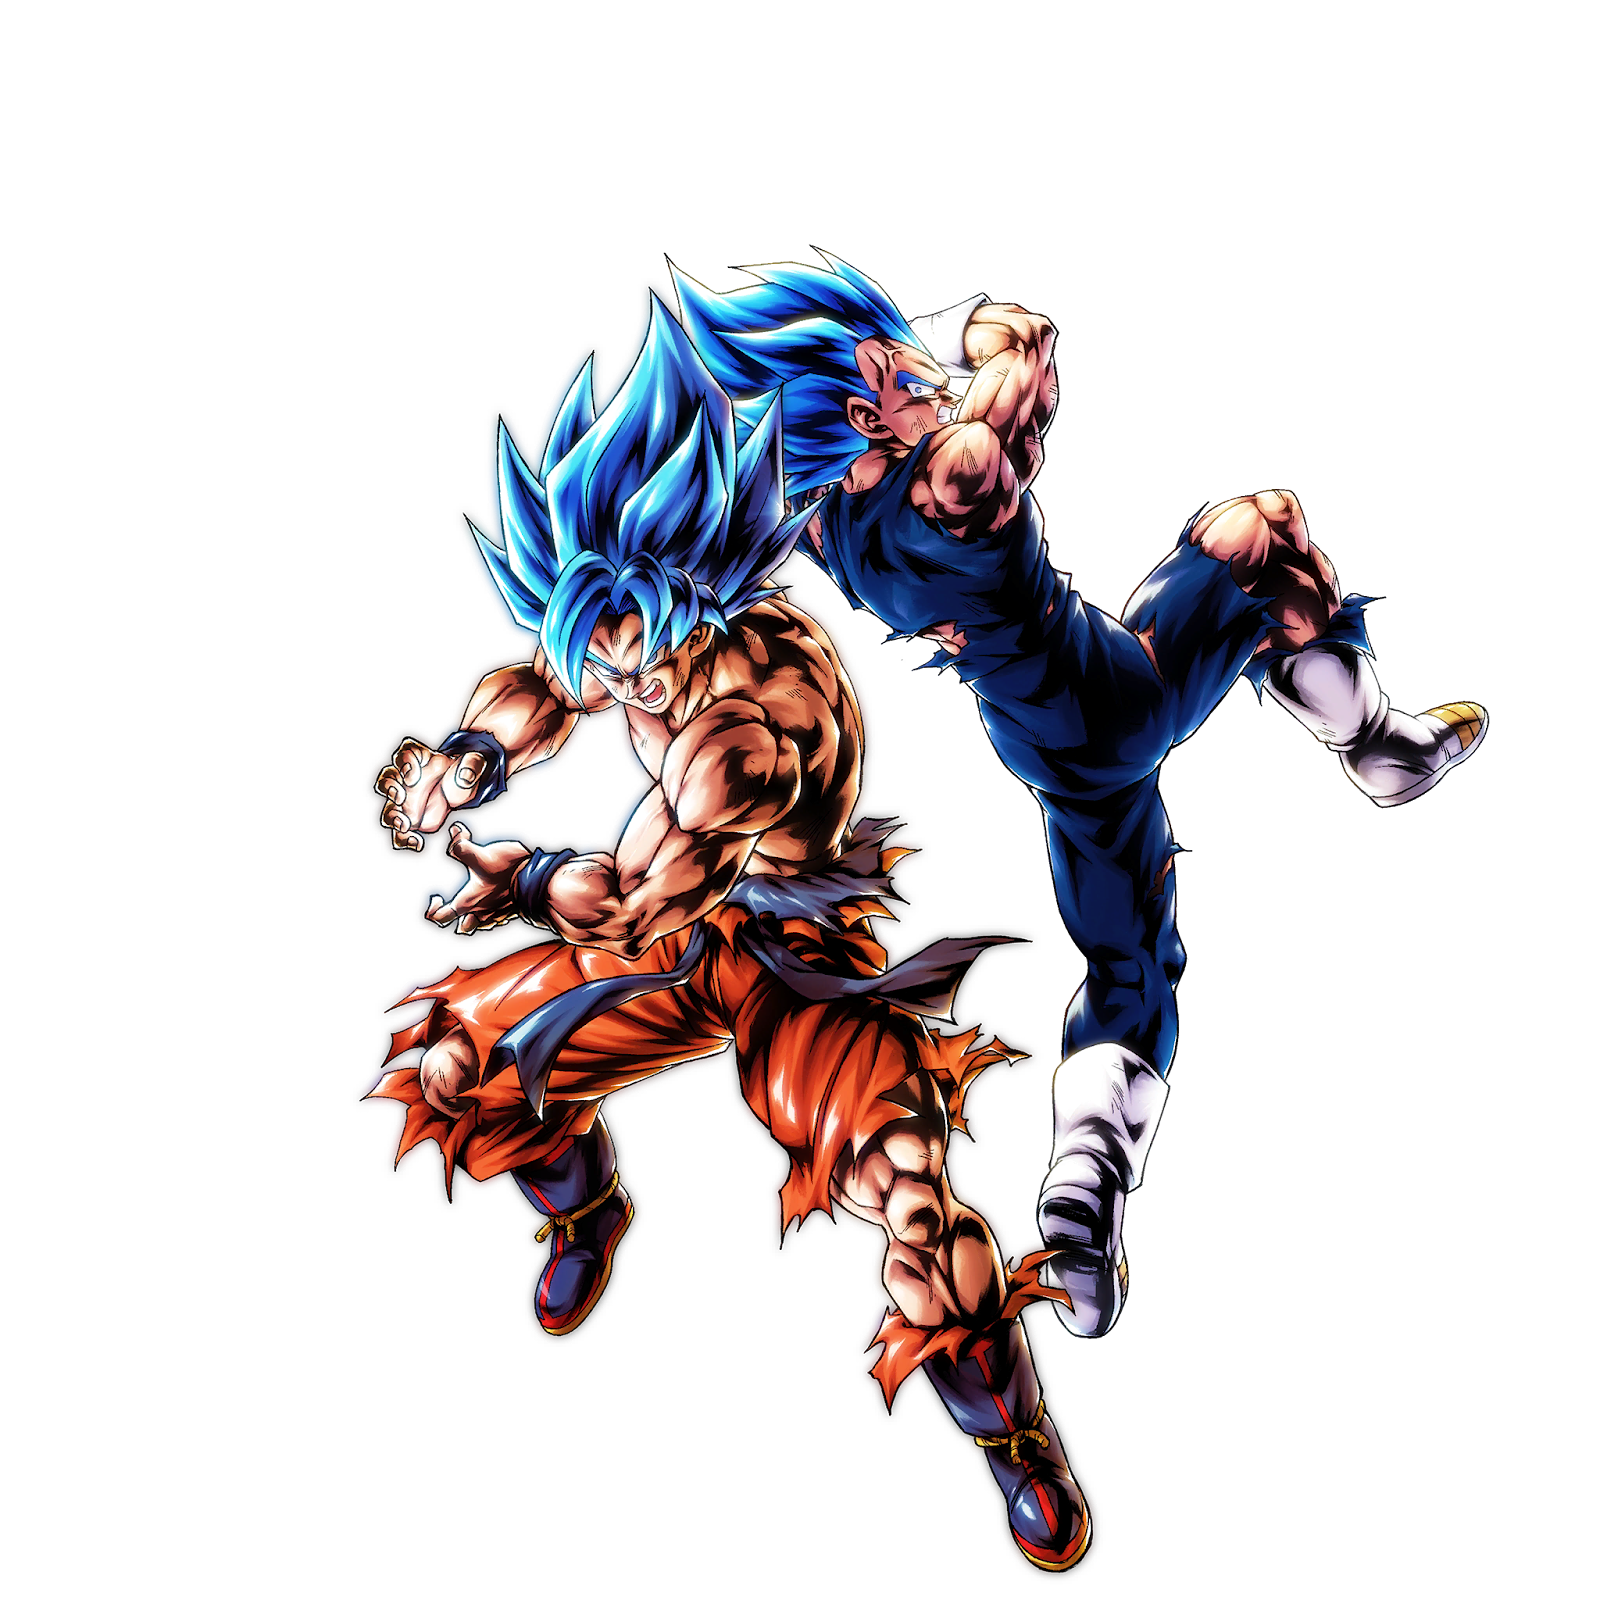 SLO on X: My Vegeta (GT) moveset for Xenoverse 2: - Shining Rage Attack  (Super) - Maximum Final Flash (Ultimate) - Super Saiyan + Super Saiyan 3  (Awoken)  / X